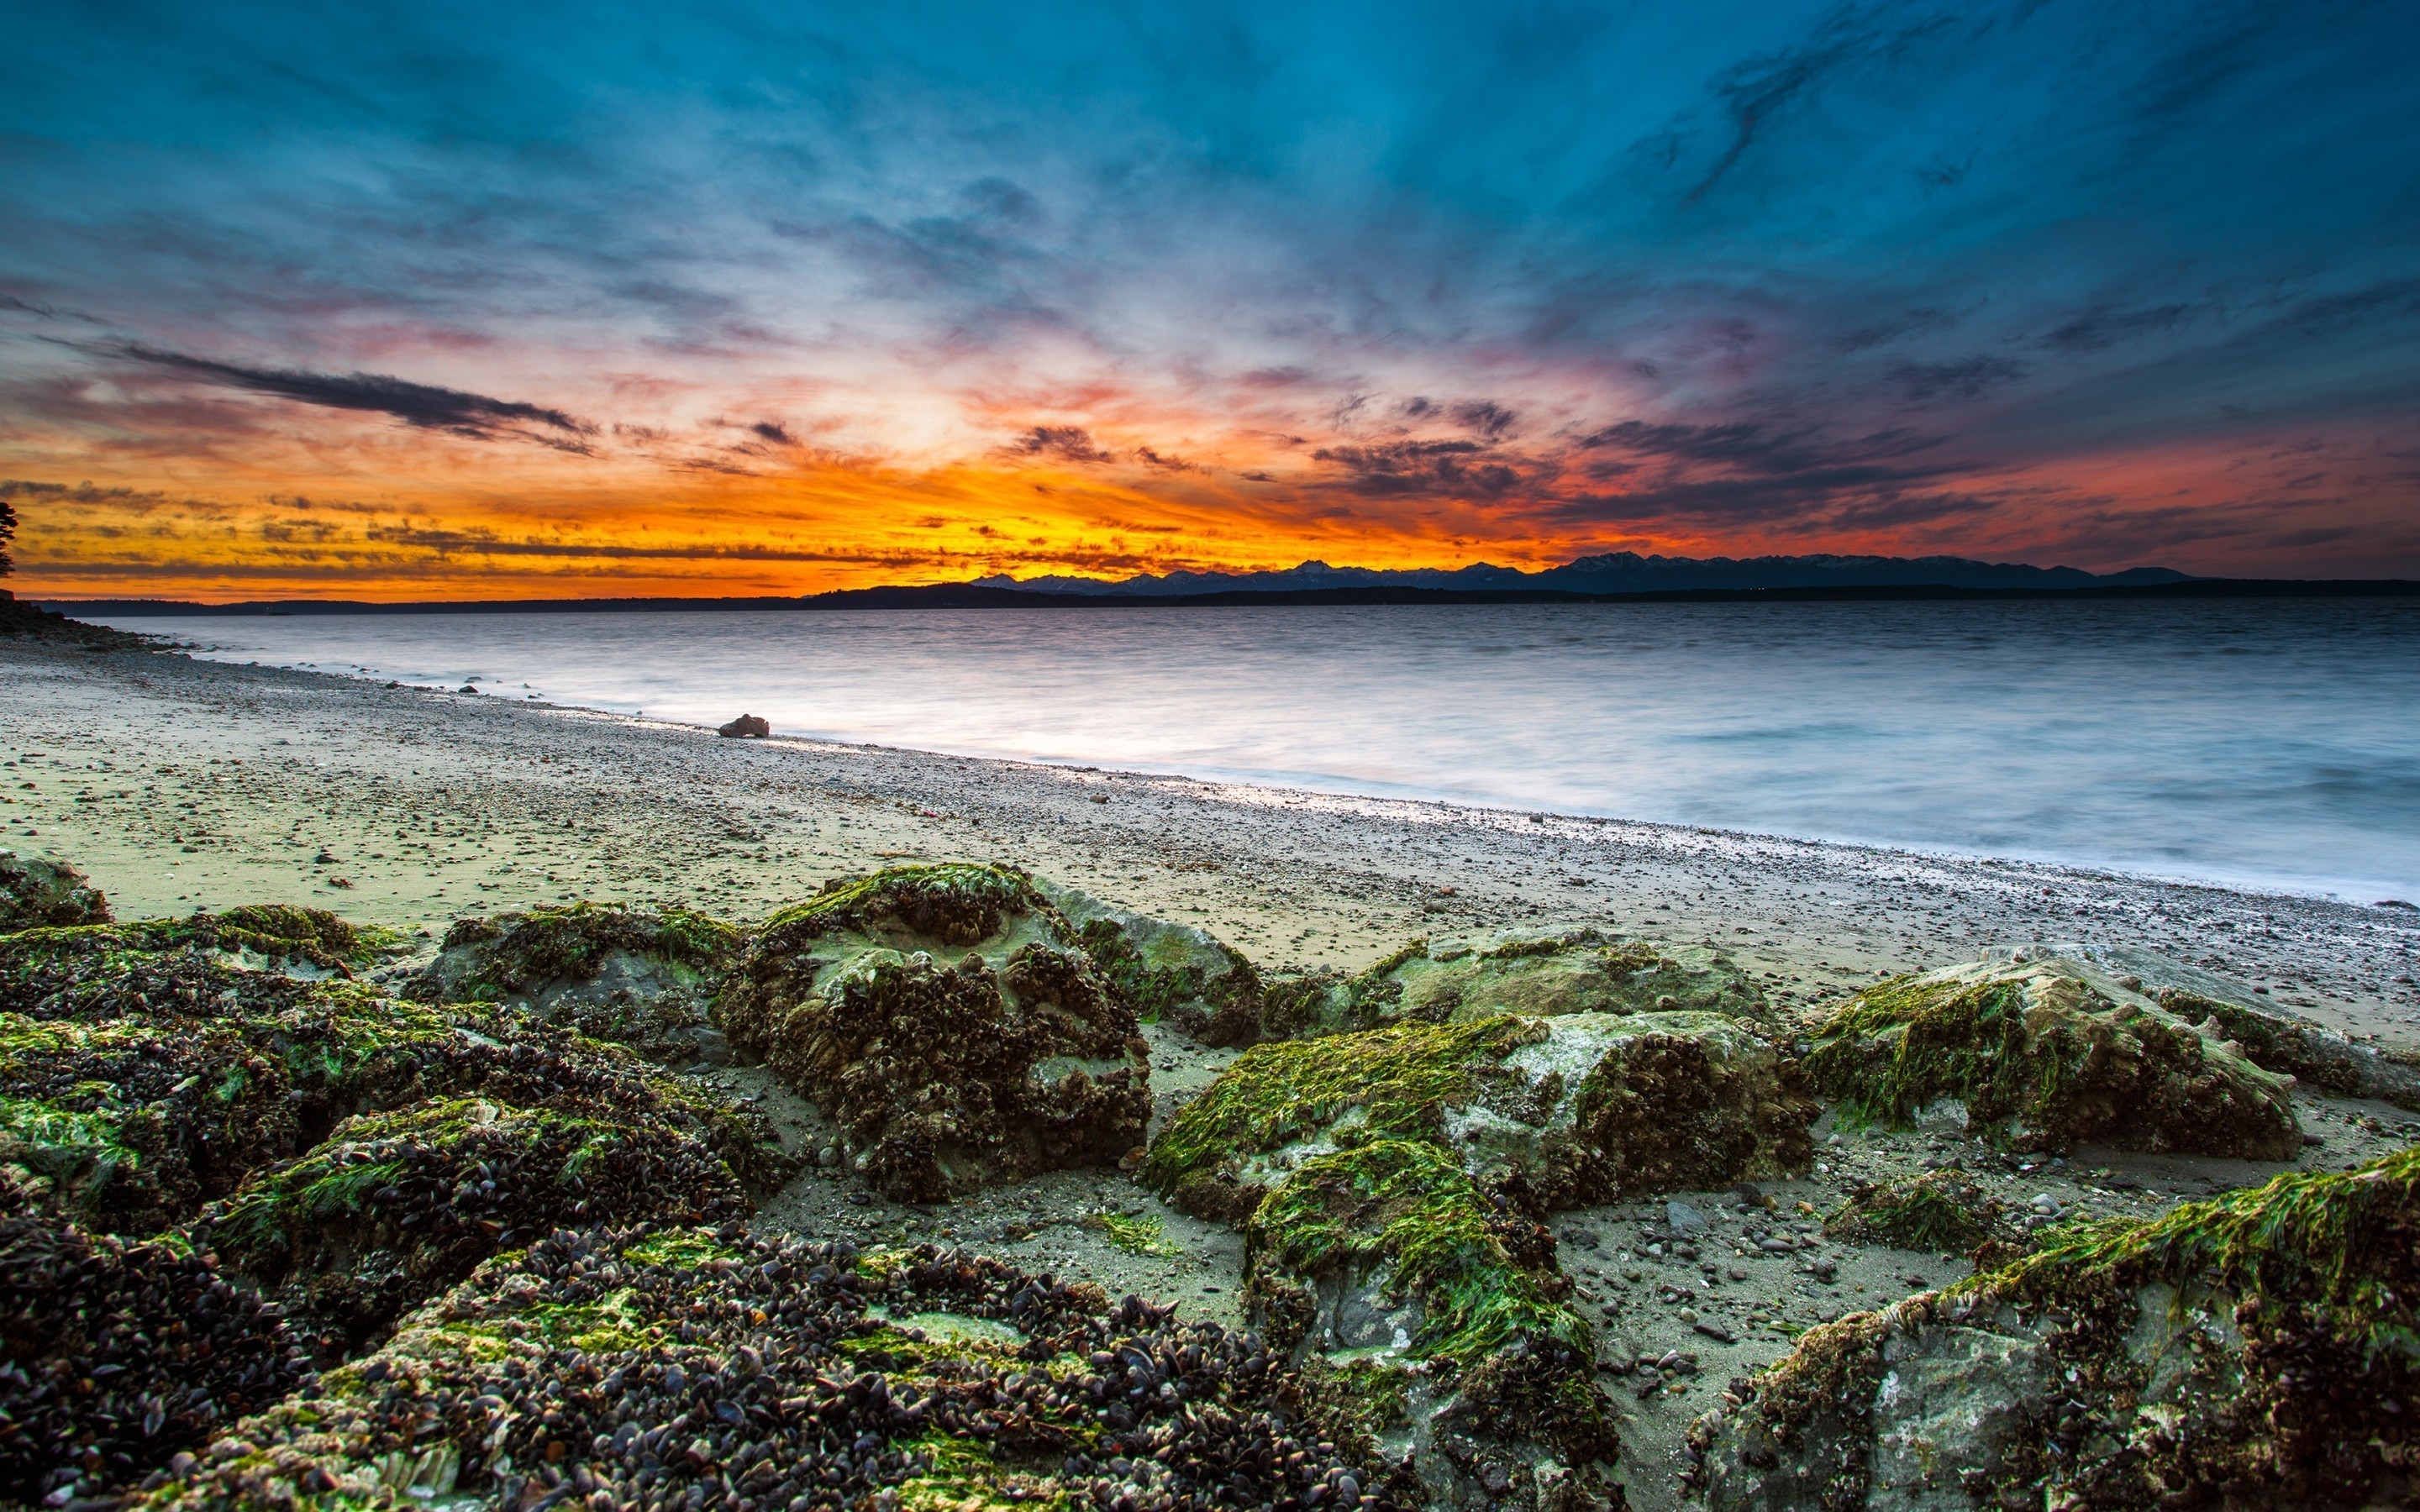 Virgin Beach Sunset for 2880 x 1800 Retina Display resolution